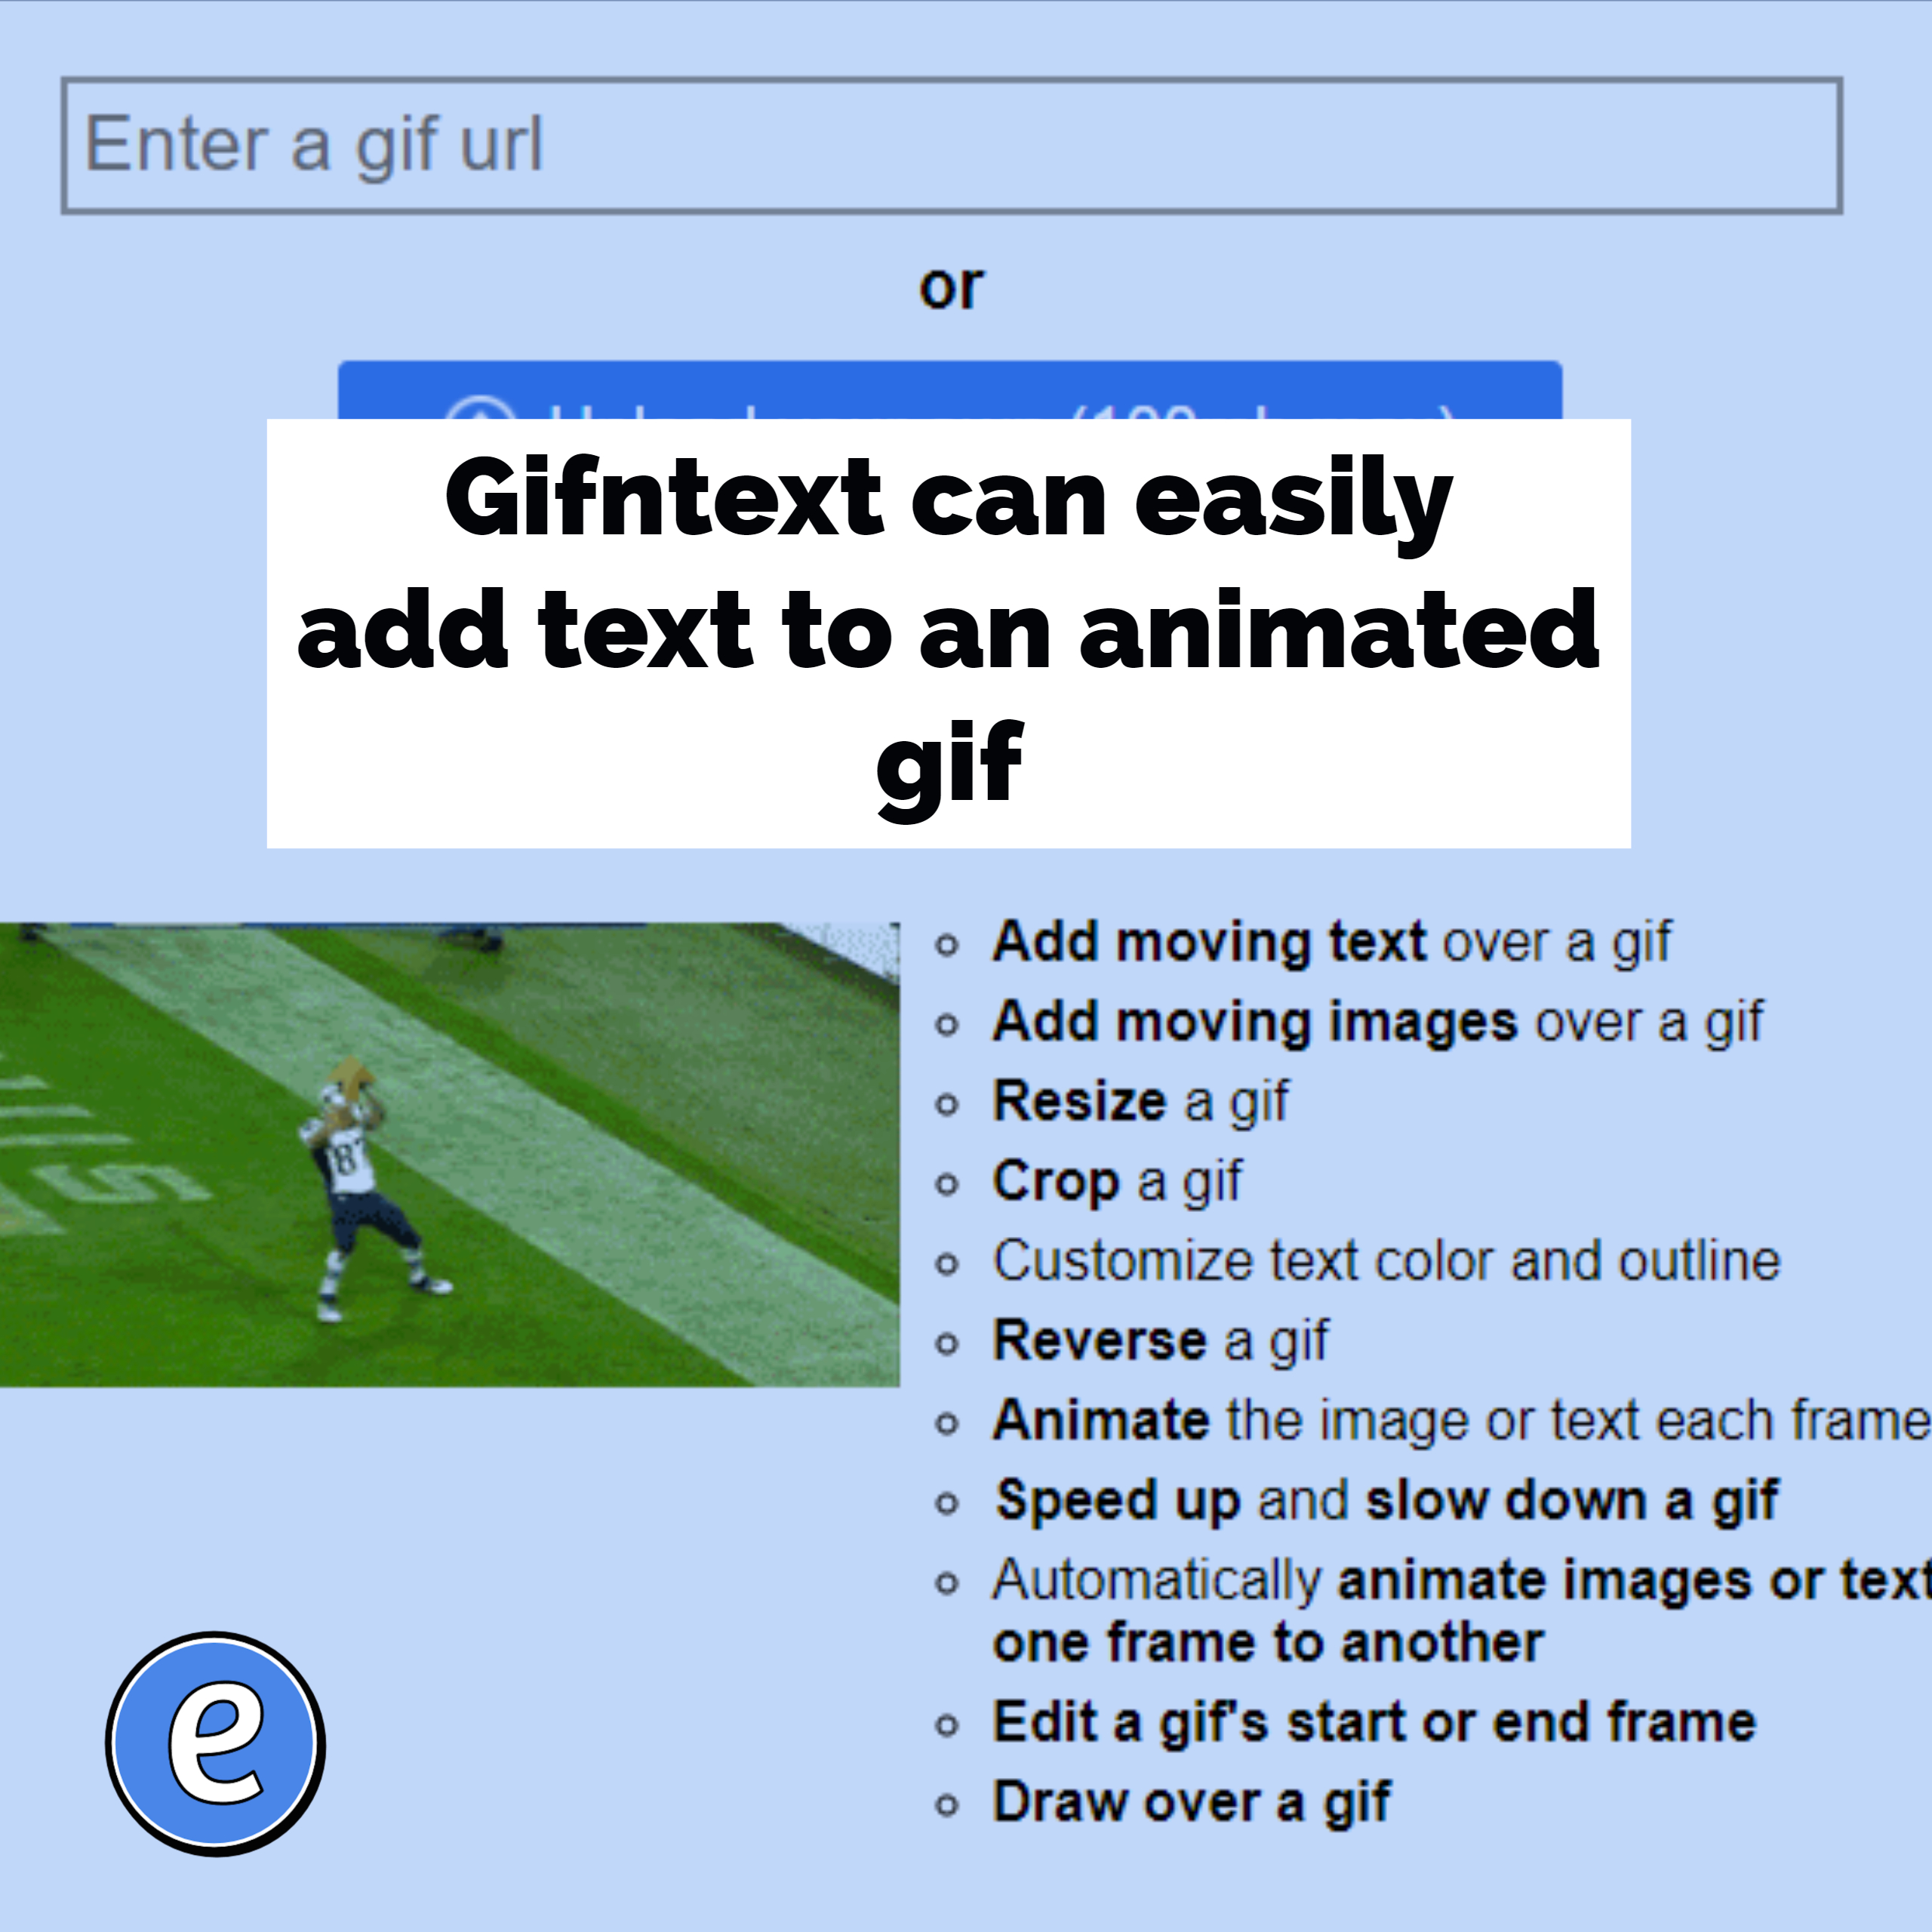 Gifntext can easily add text to an animated gif